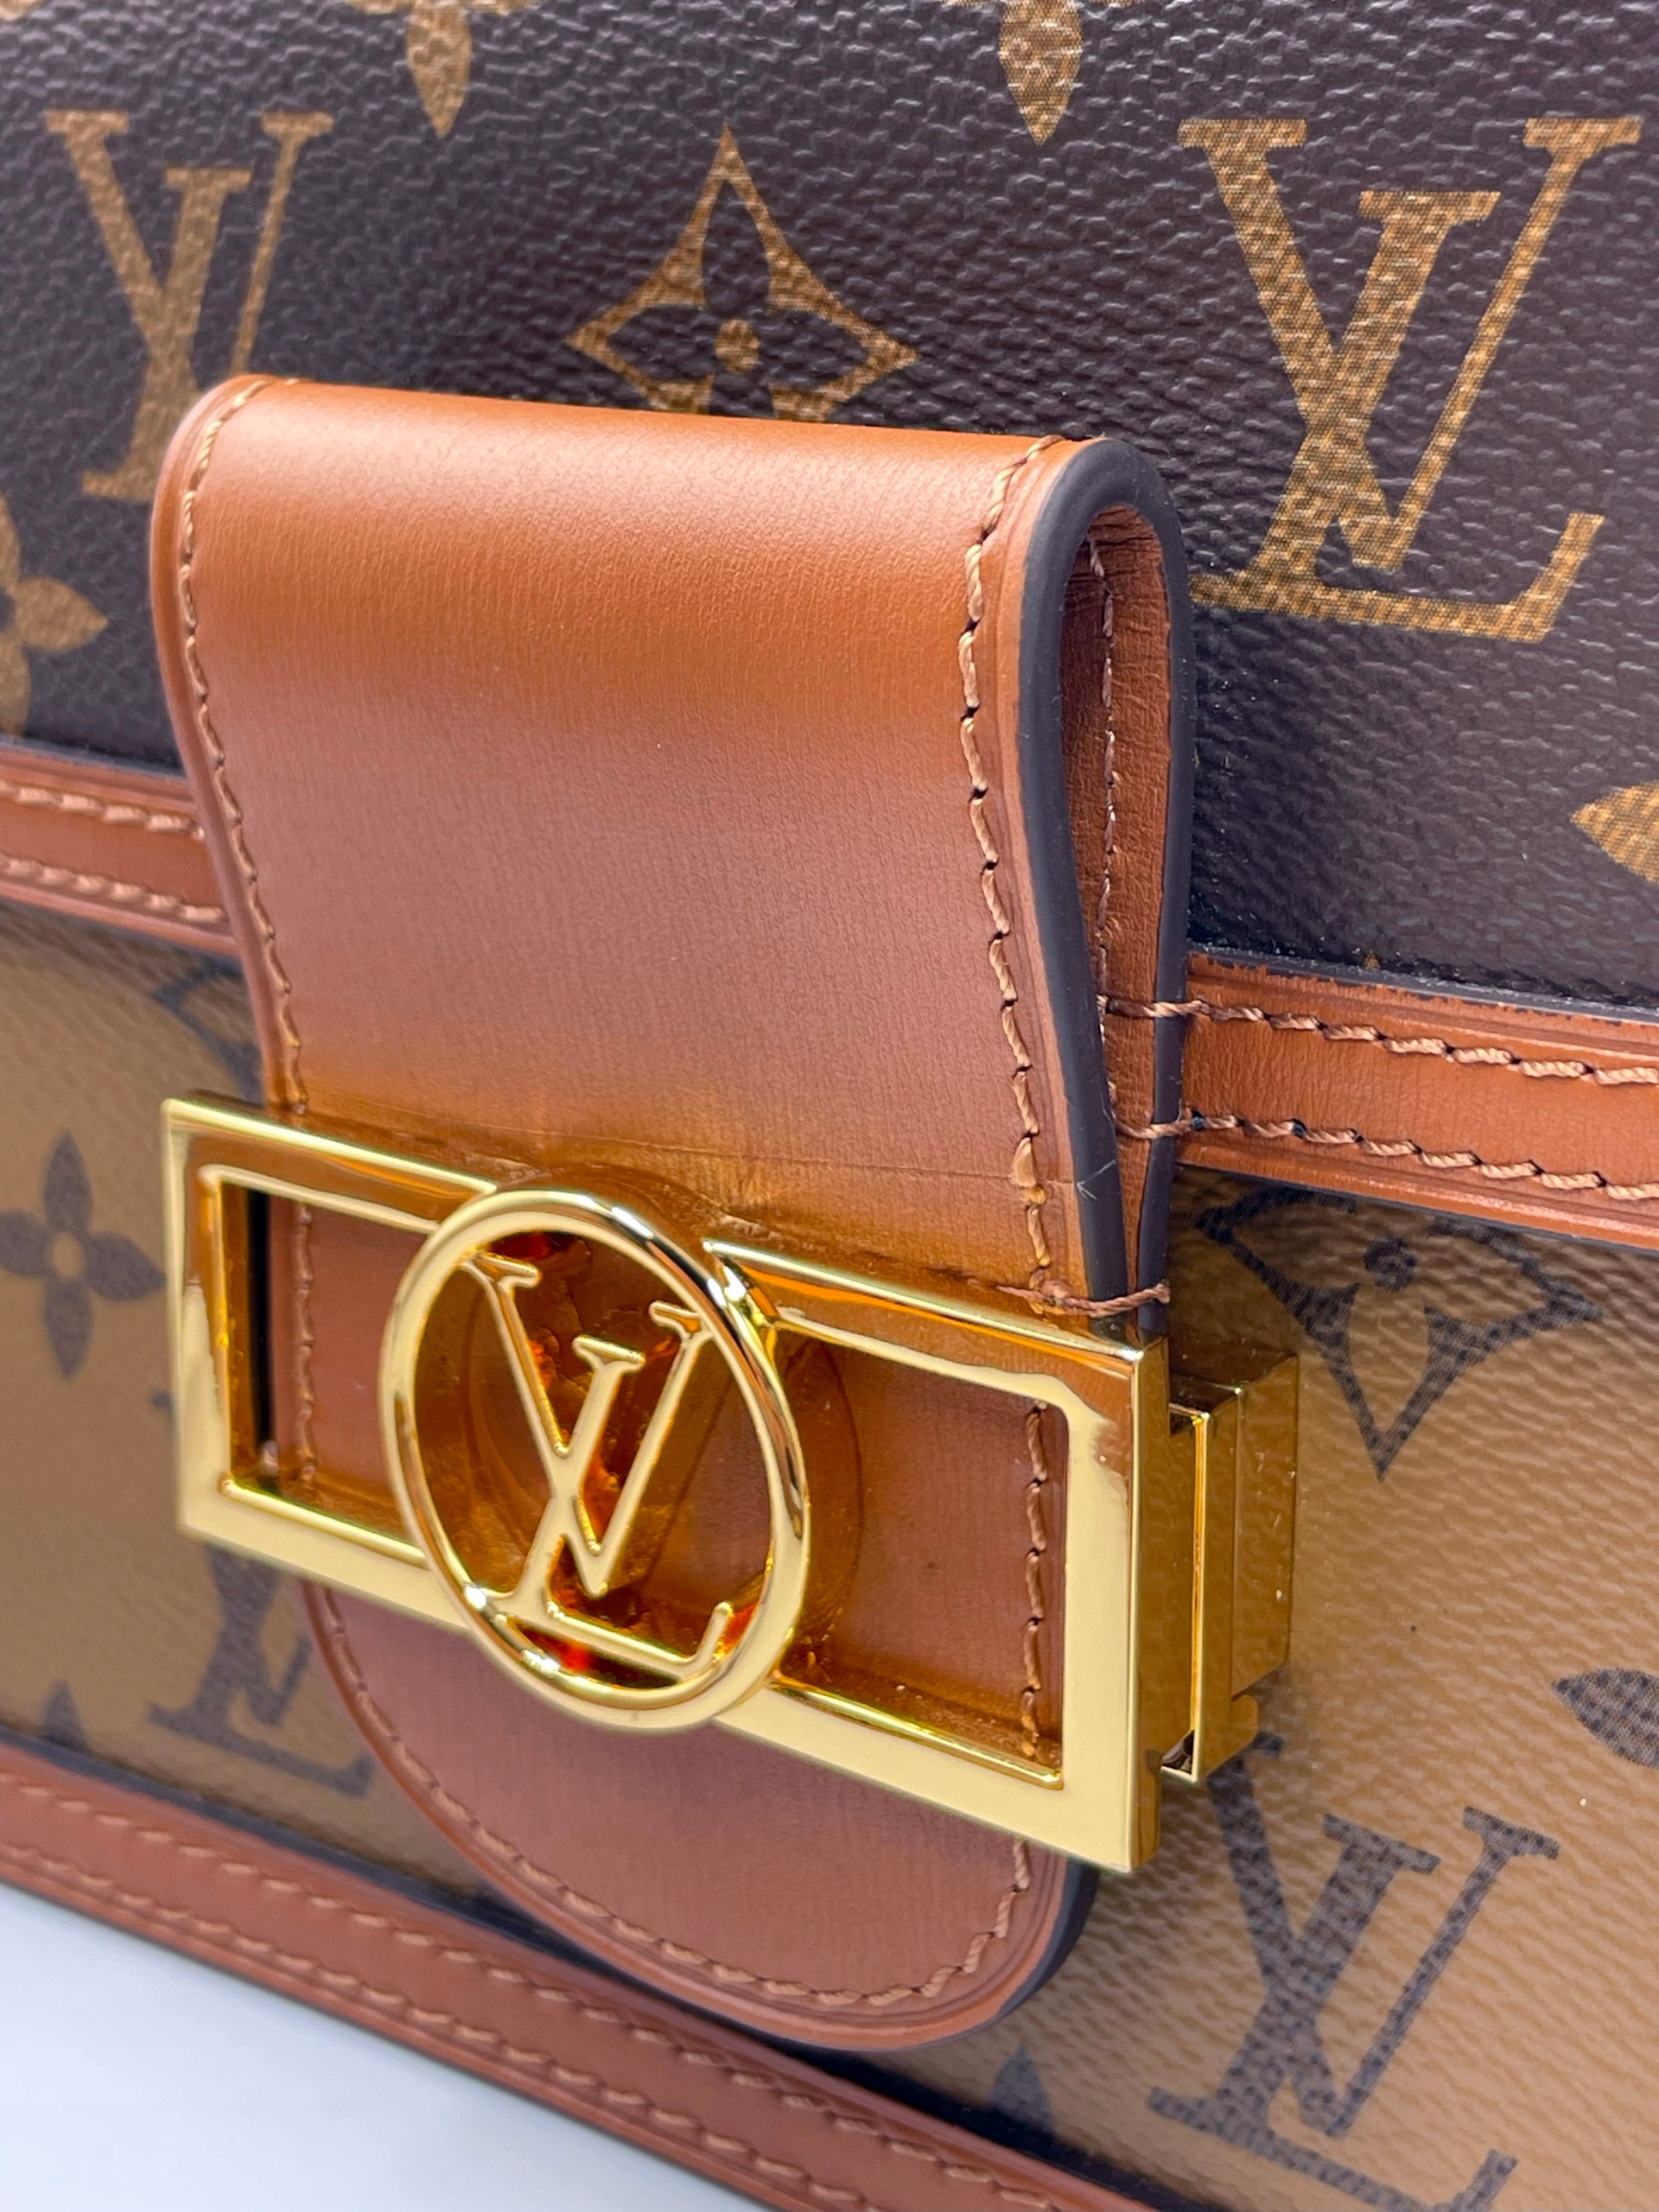 Louis Vuitton Mini dauphine (M45959)